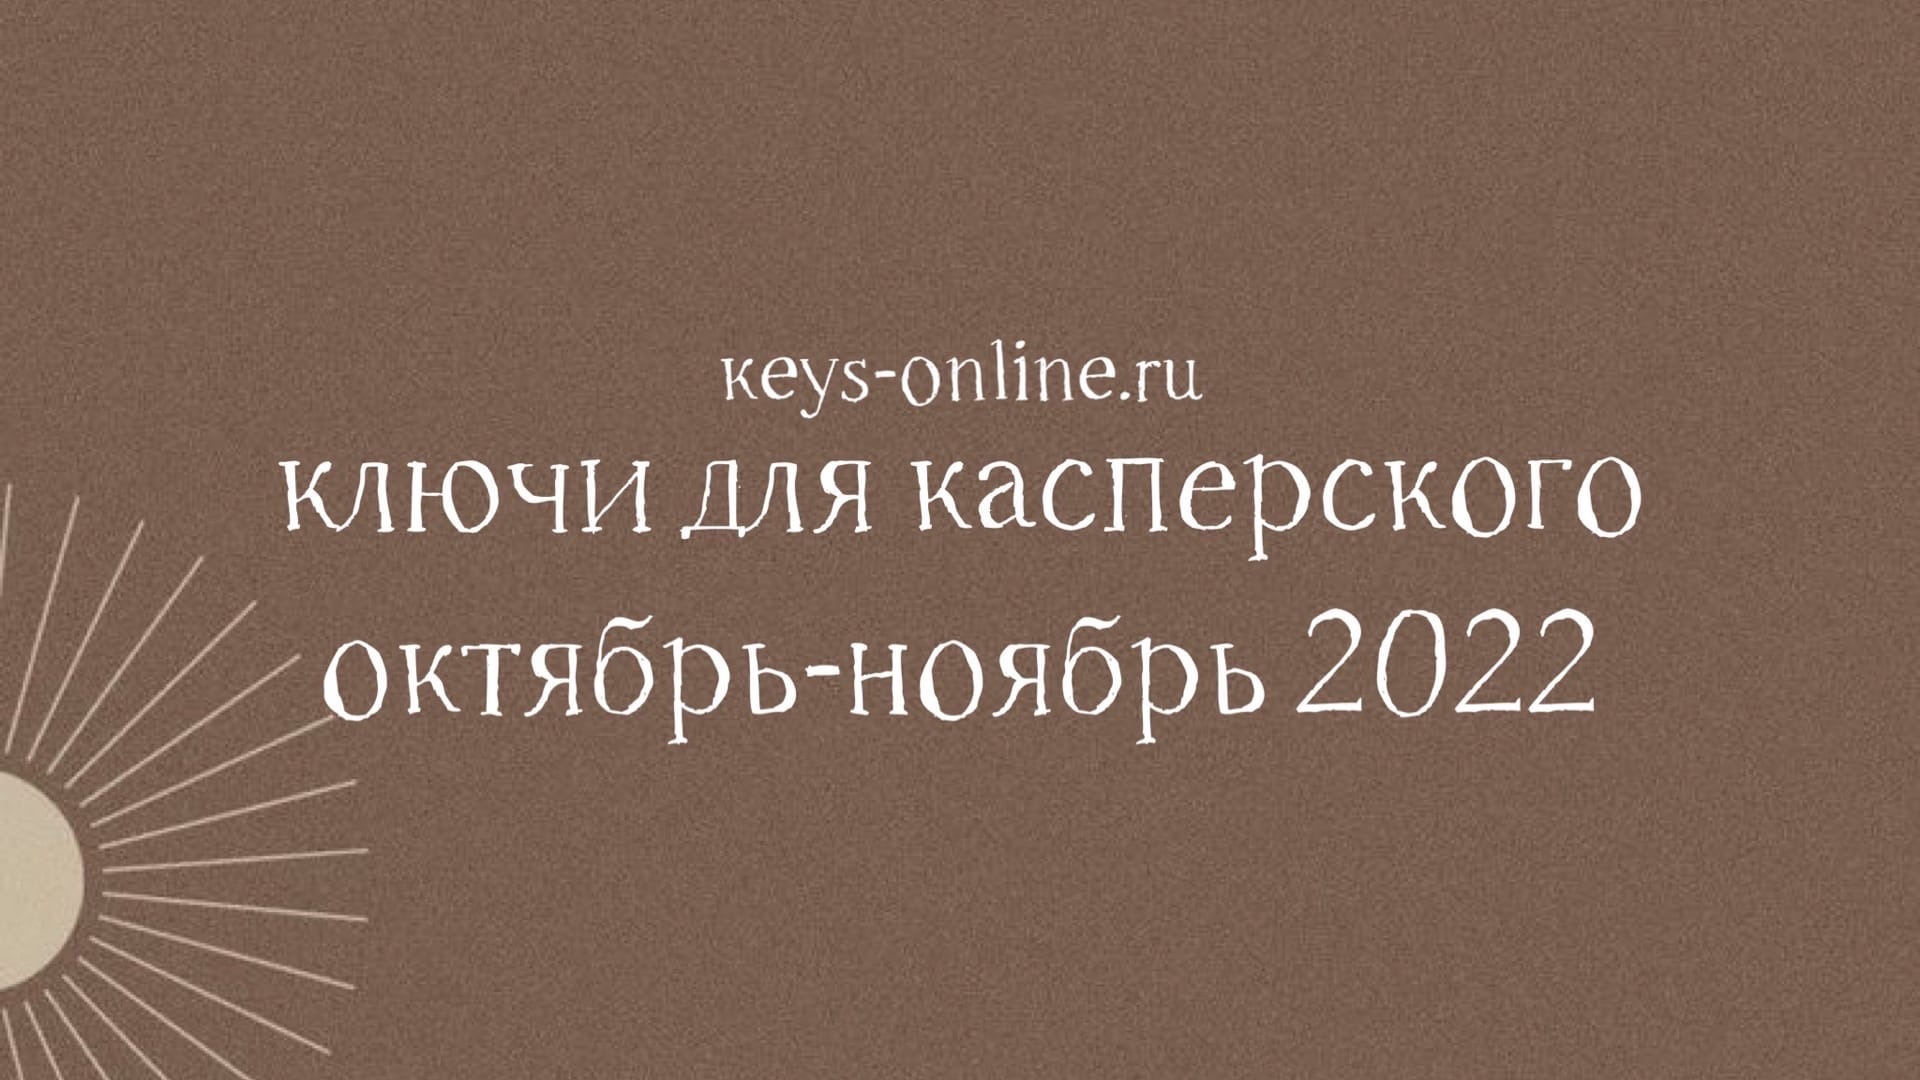 Ключи для Касперского октябрь – ноябрь 2022